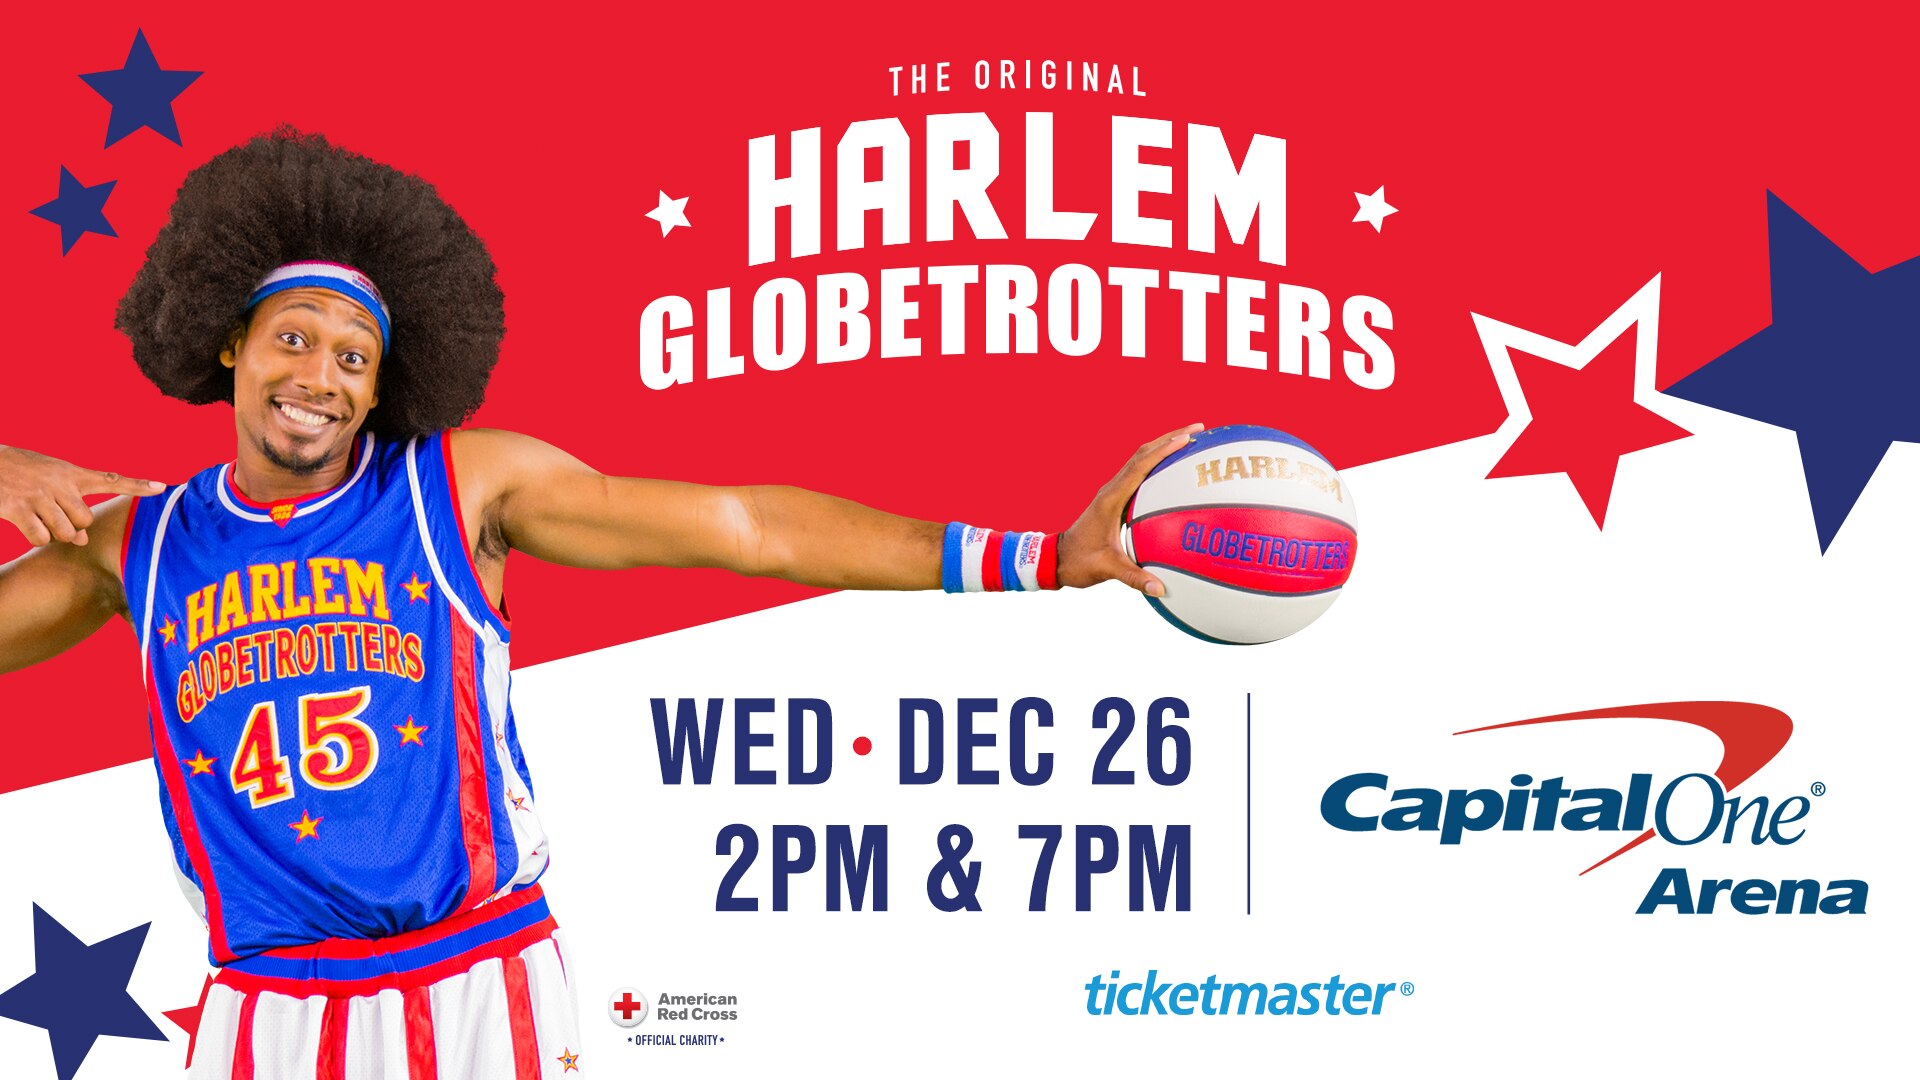 Harlem Globetrotters Shows Capital One Arena